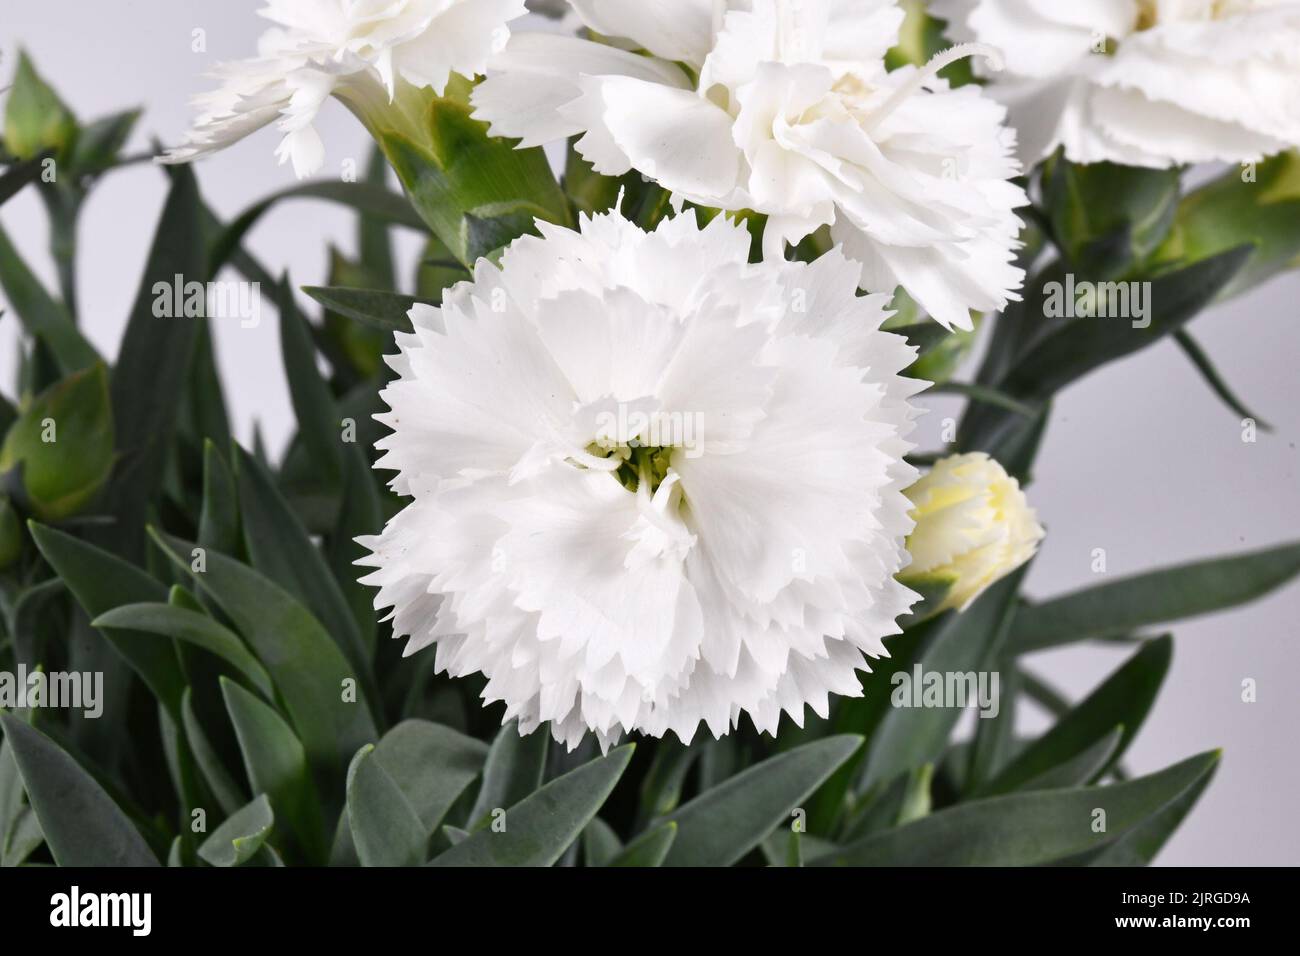 White flower of Dianthus plant Stock Photo